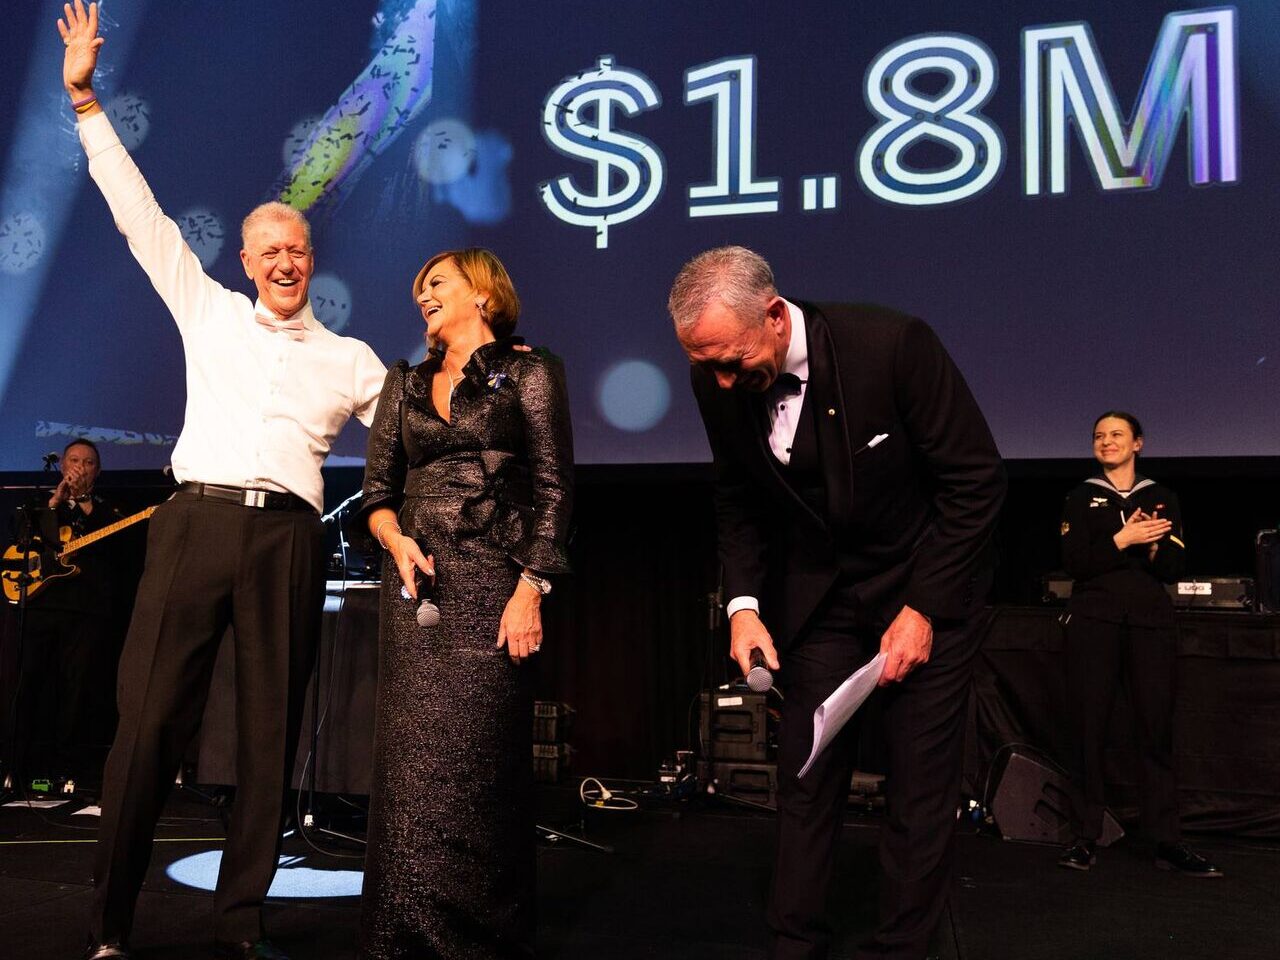 Tour de Cure Australia raised $1.8m for Neuroblastoma at their Snow Ball – Children’s Cancer Institute